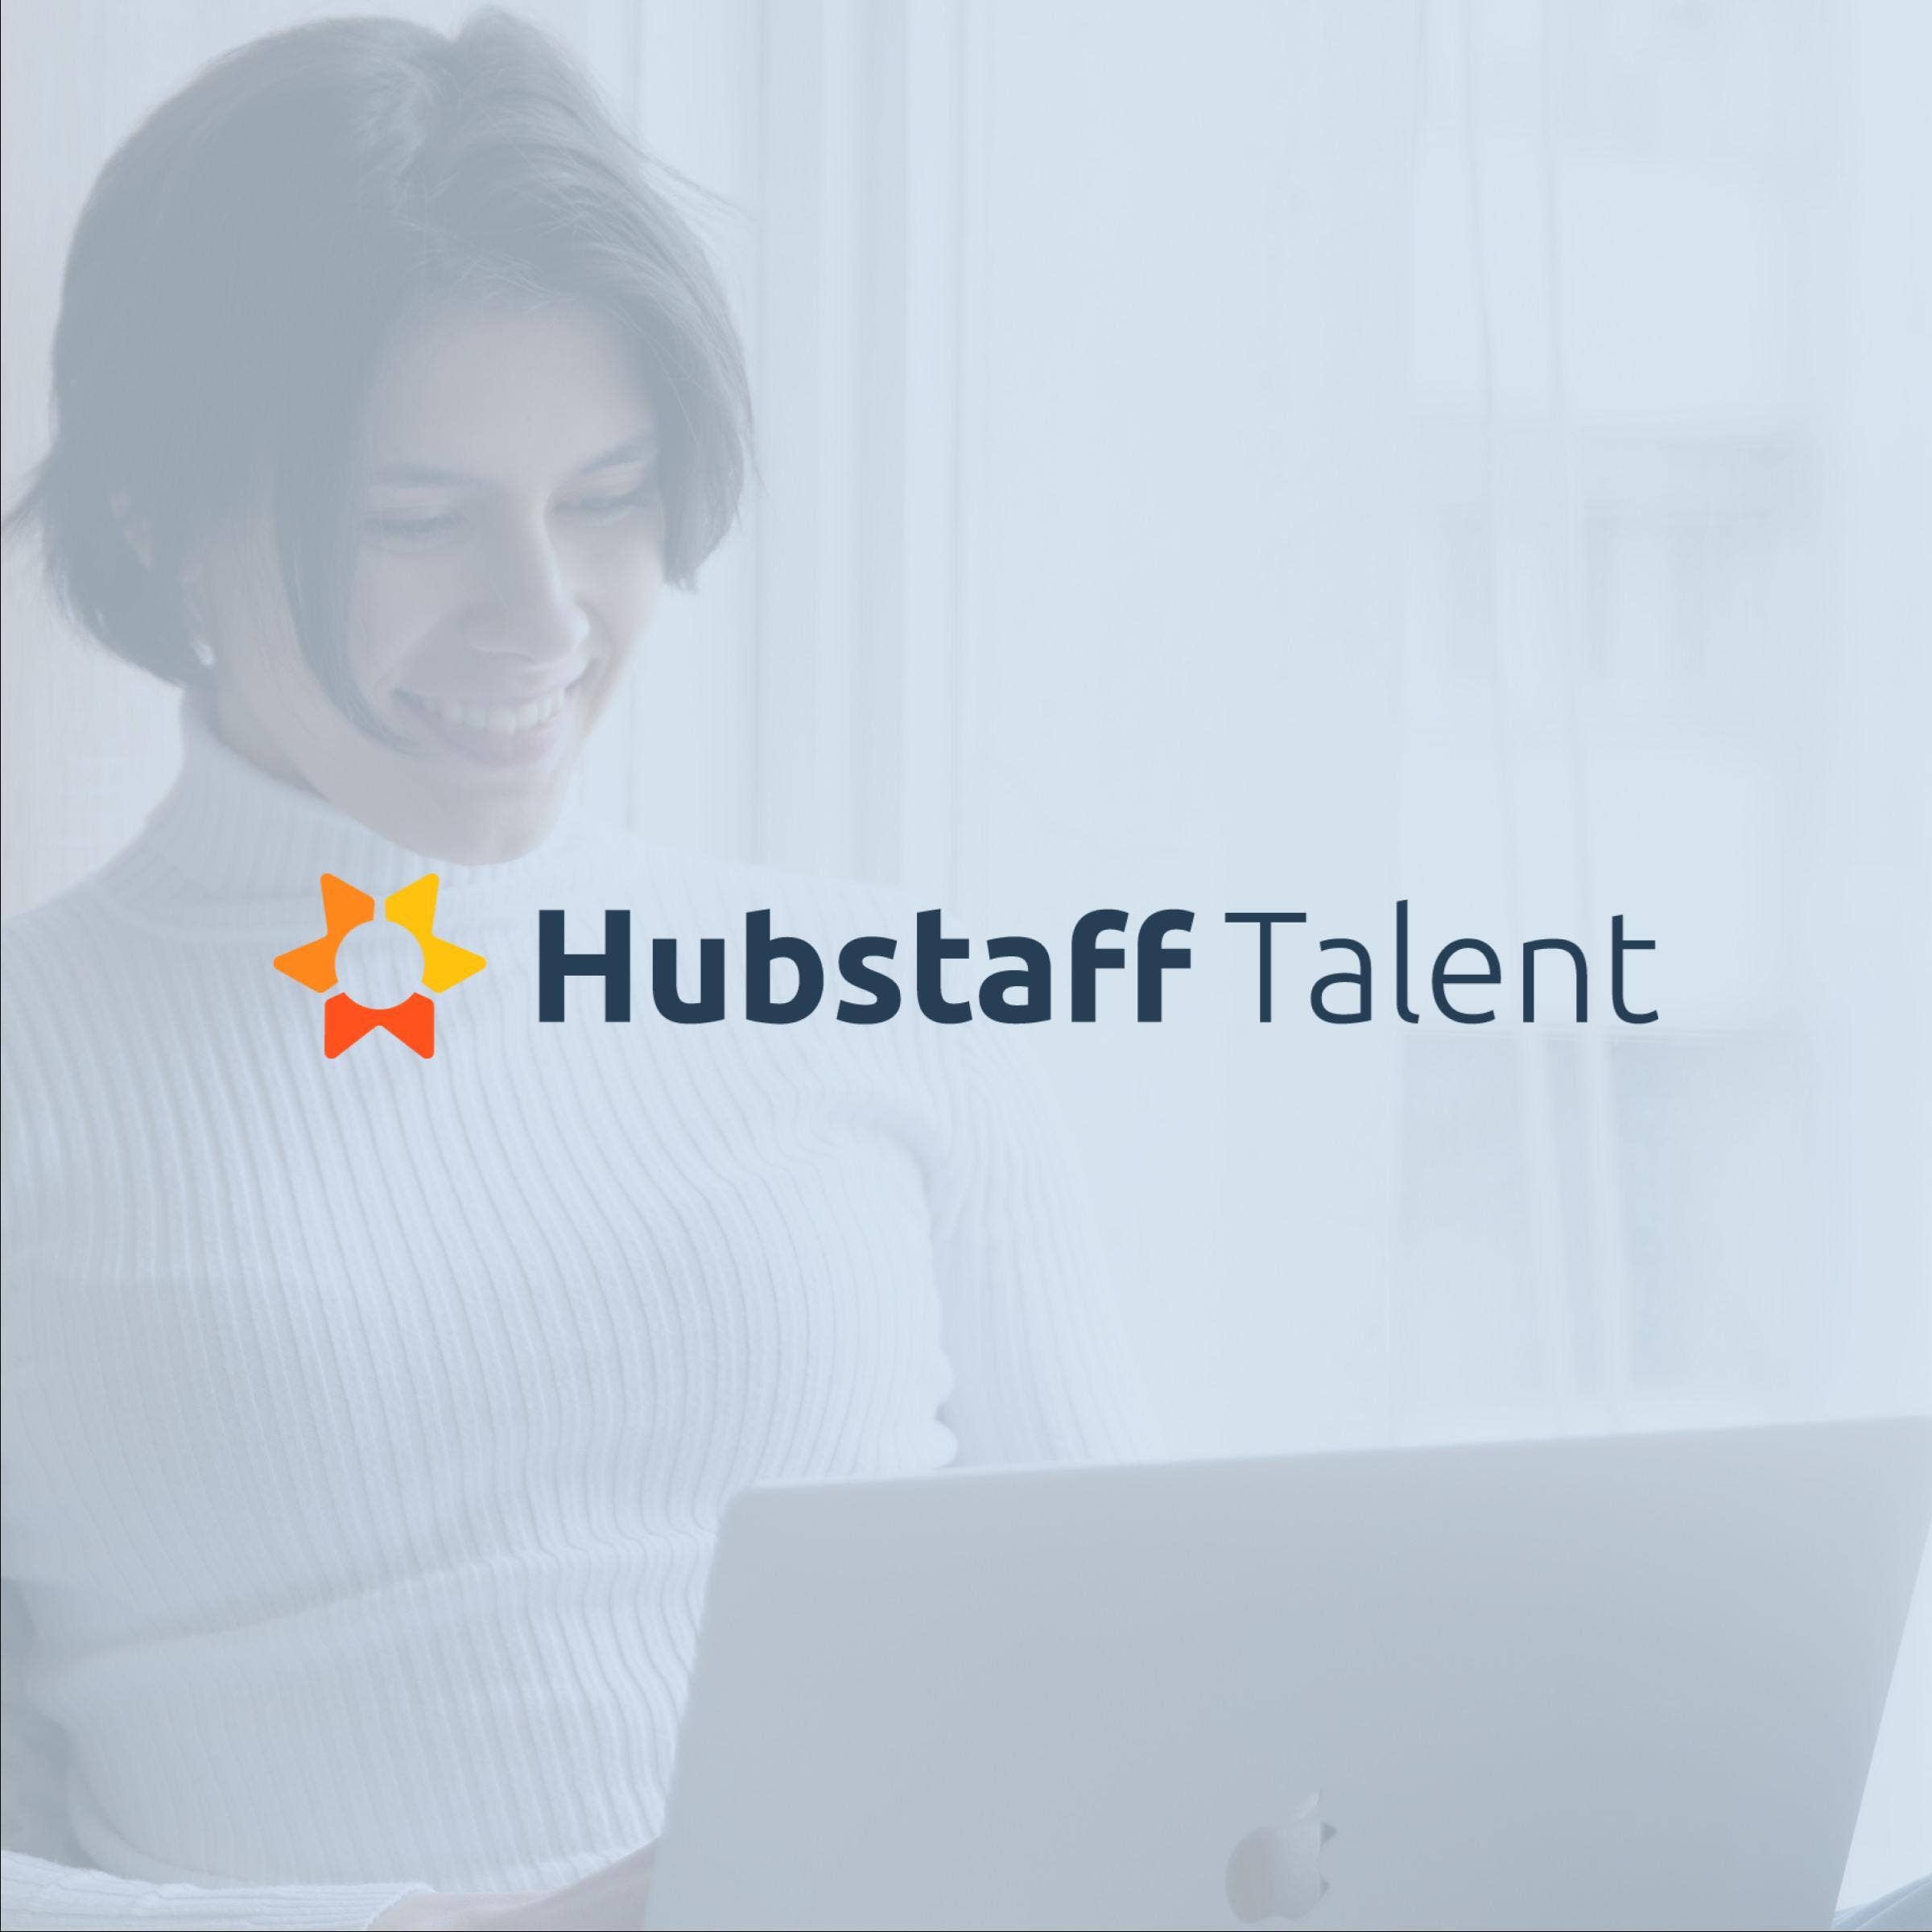 hubstaff talent review